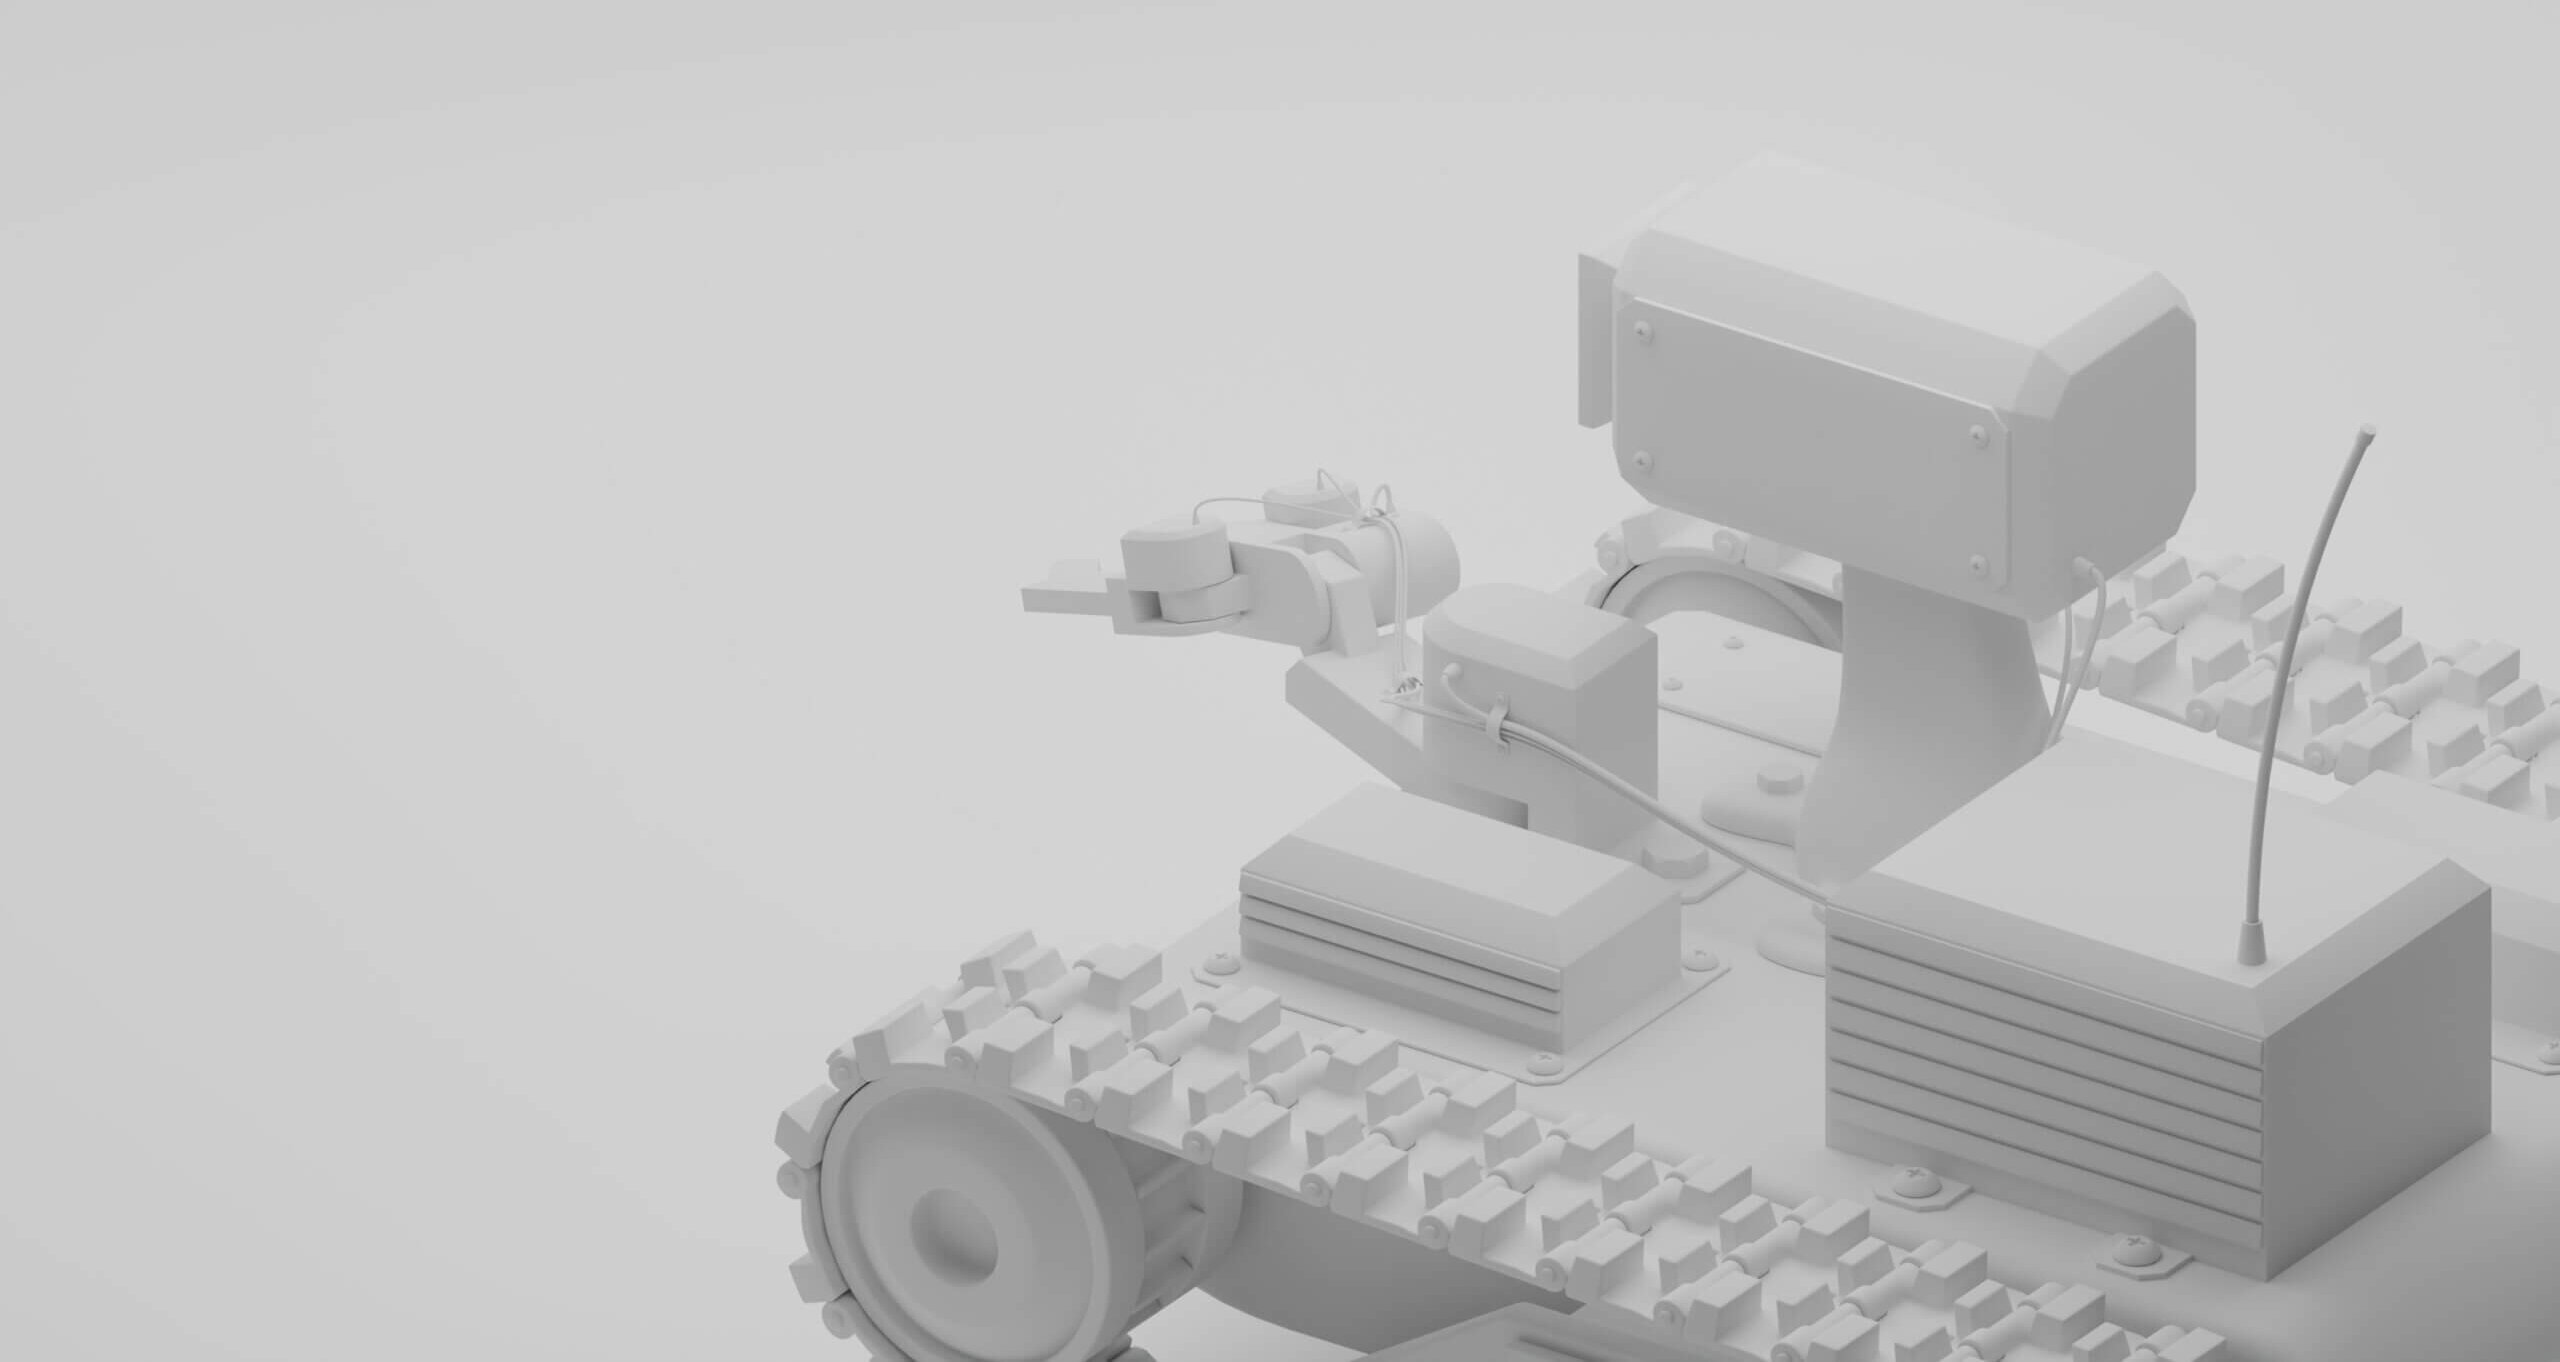 Bomb disposal robot on tracks, military radio remote tank, rende